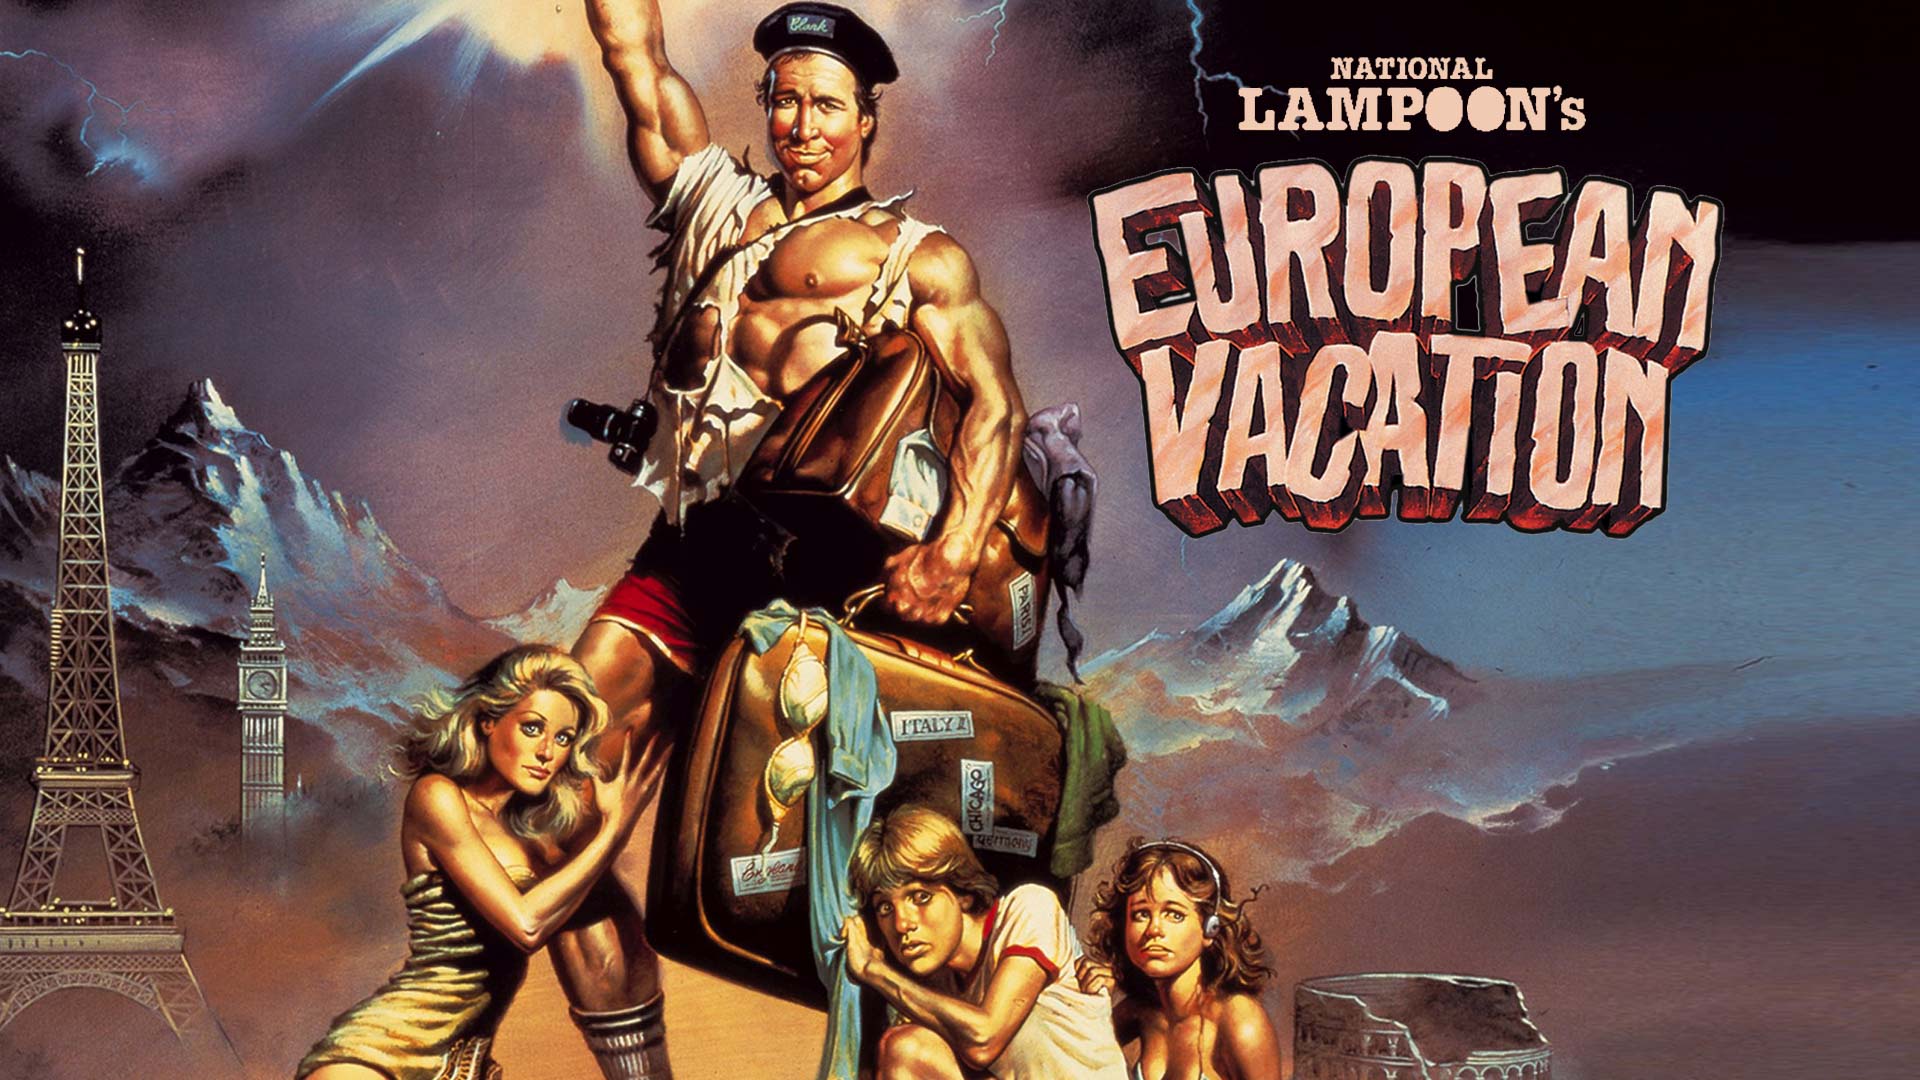 National Lampoon’s European Vacation